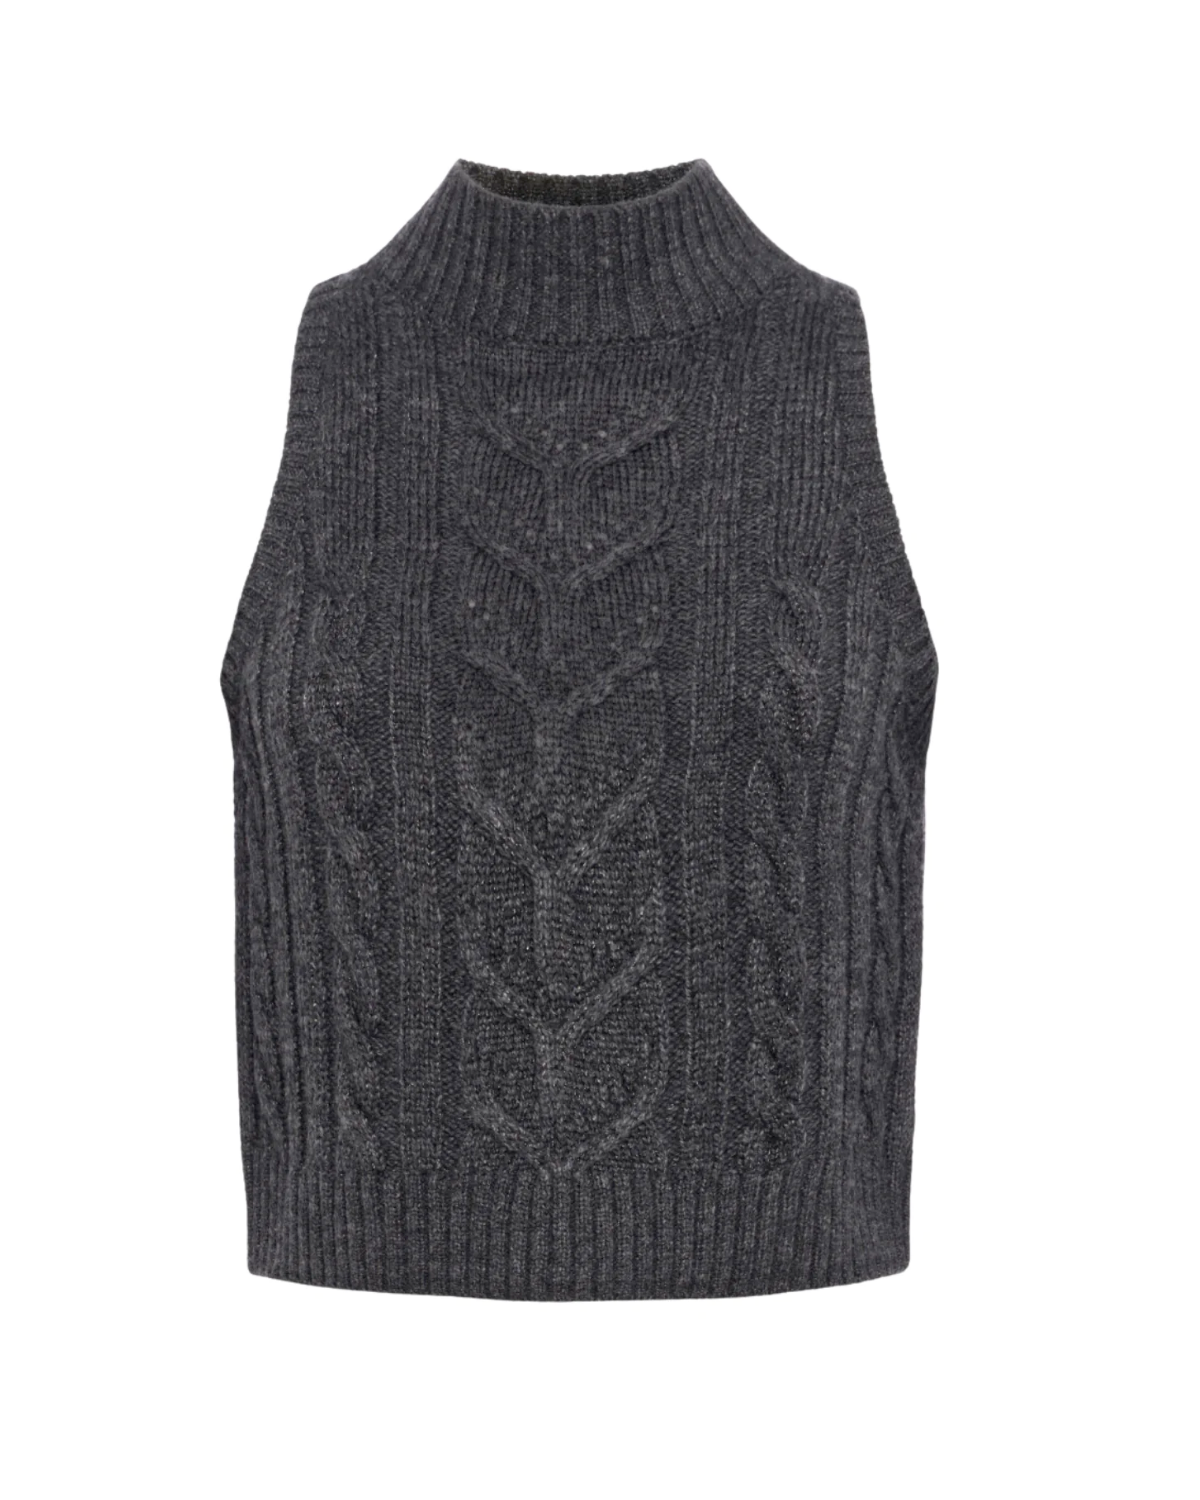 Bellini Sleeveless Turtleneck Sweater (Charcoal)